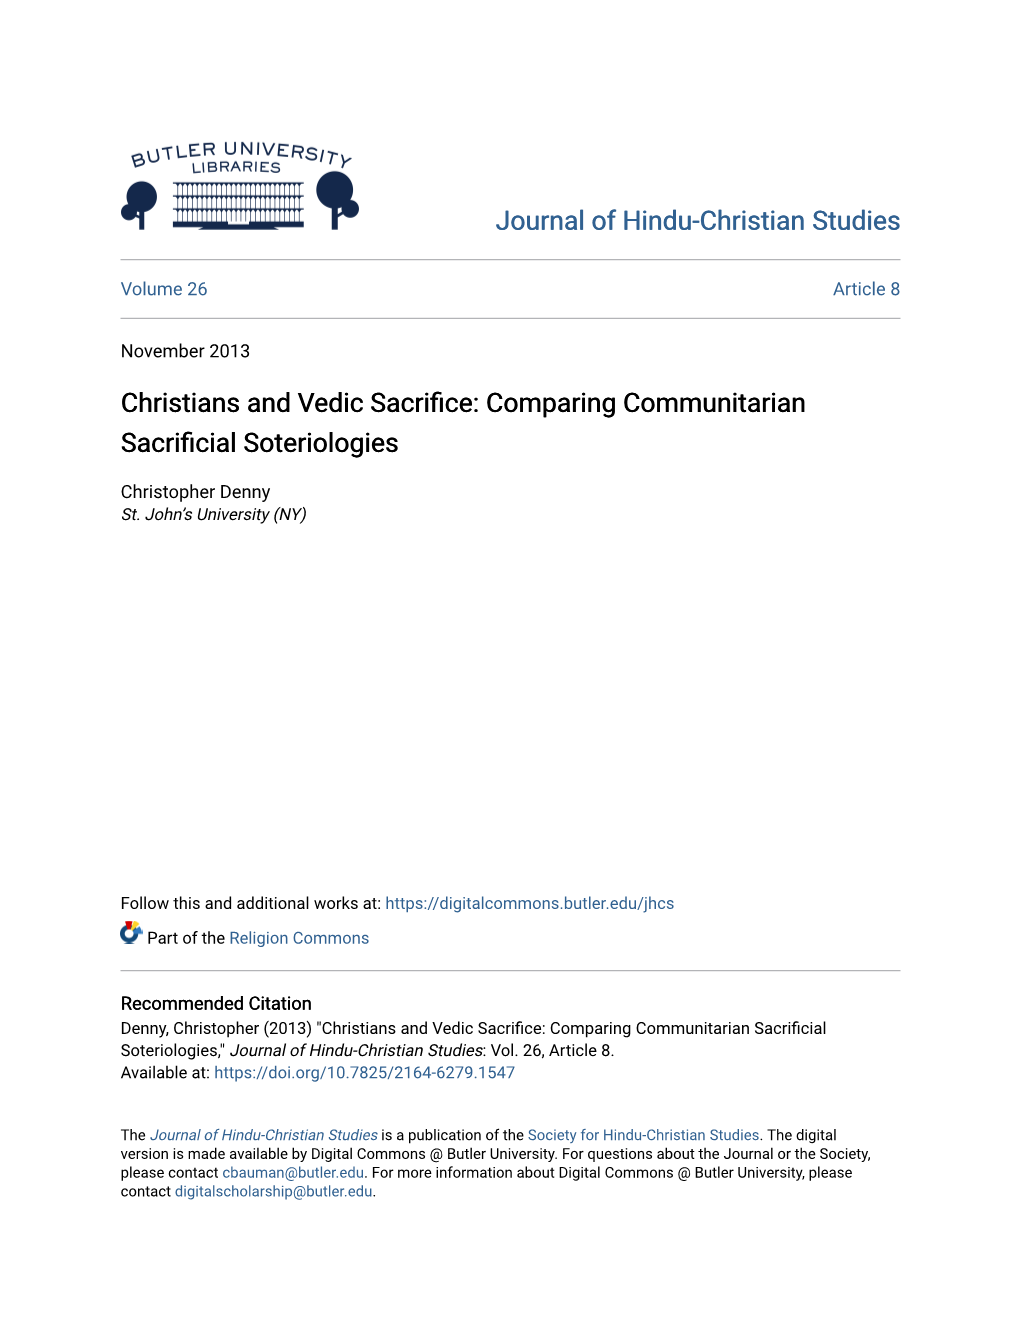 Christians and Vedic Sacrifice: Comparing Communitarian Sacrificial Soteriologies